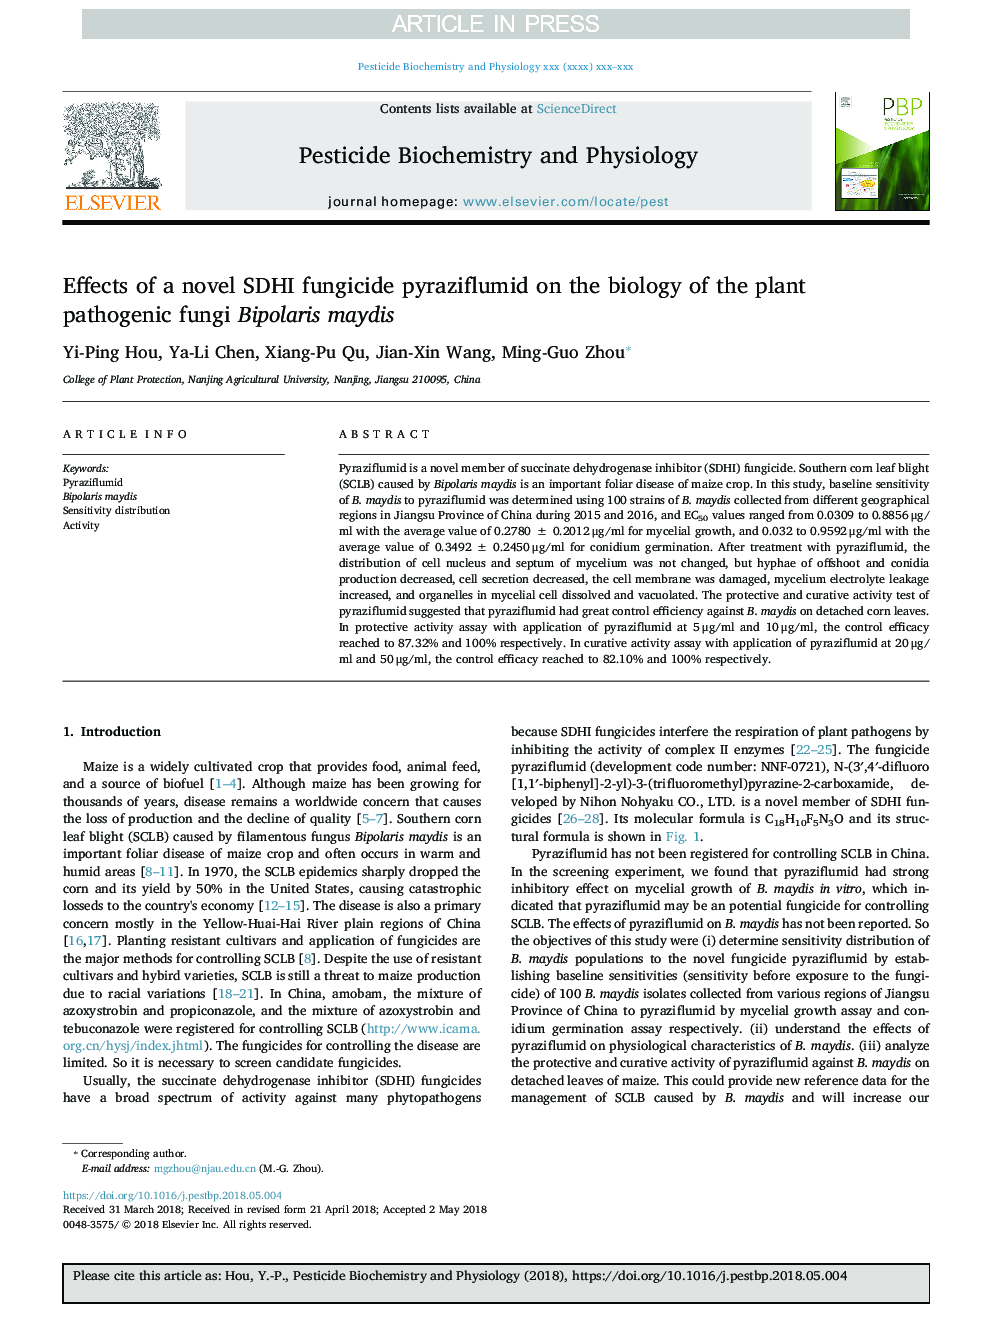 Effects of a novel SDHI fungicide pyraziflumid on the biology of the plant pathogenic fungi Bipolaris maydis